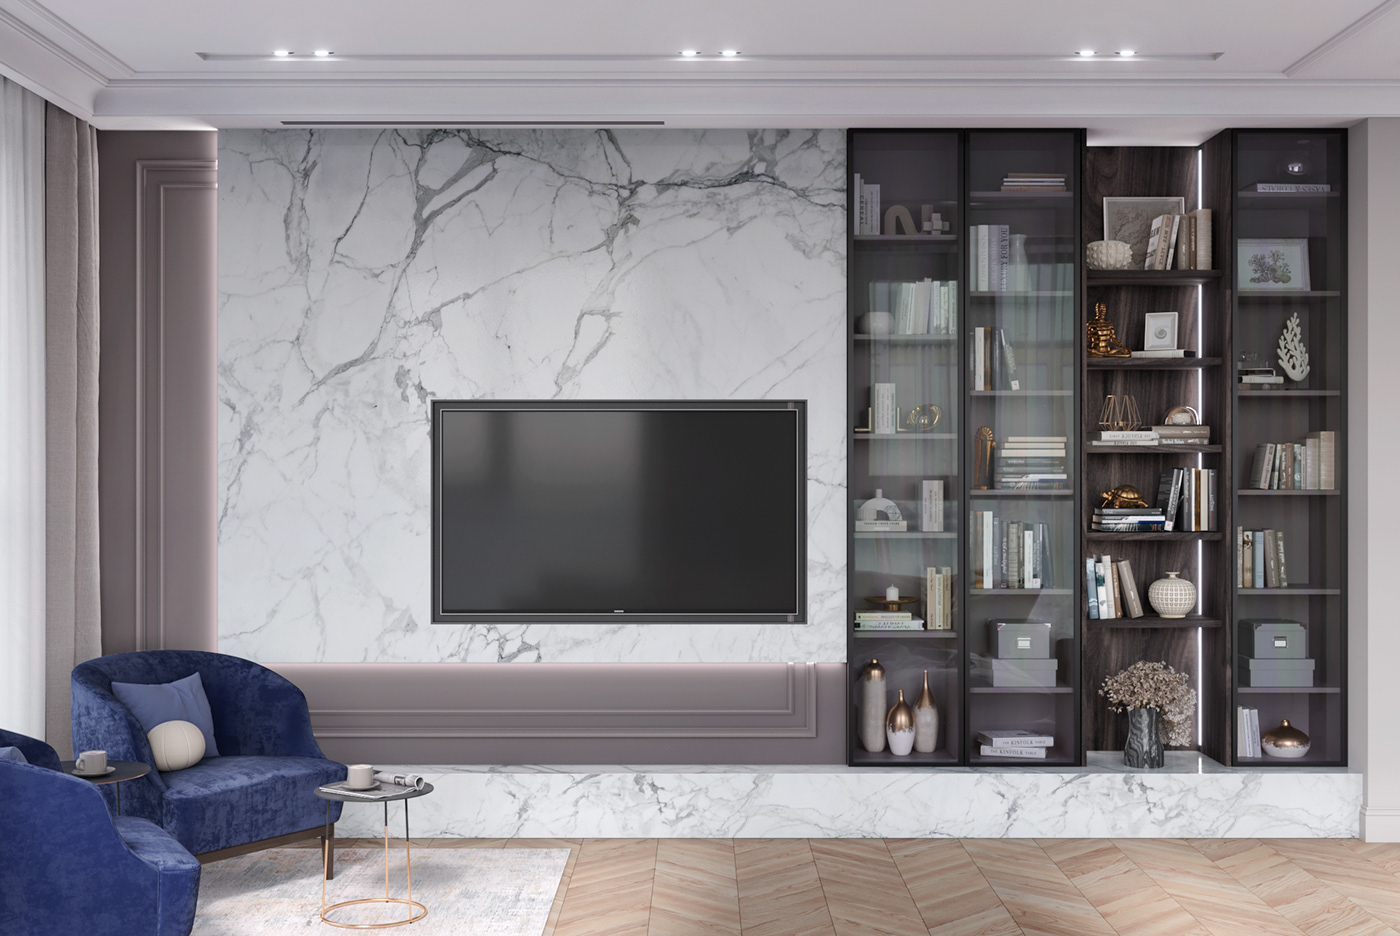 visualization 3ds max corona archviz kitchen living room interior design  design architecture Render